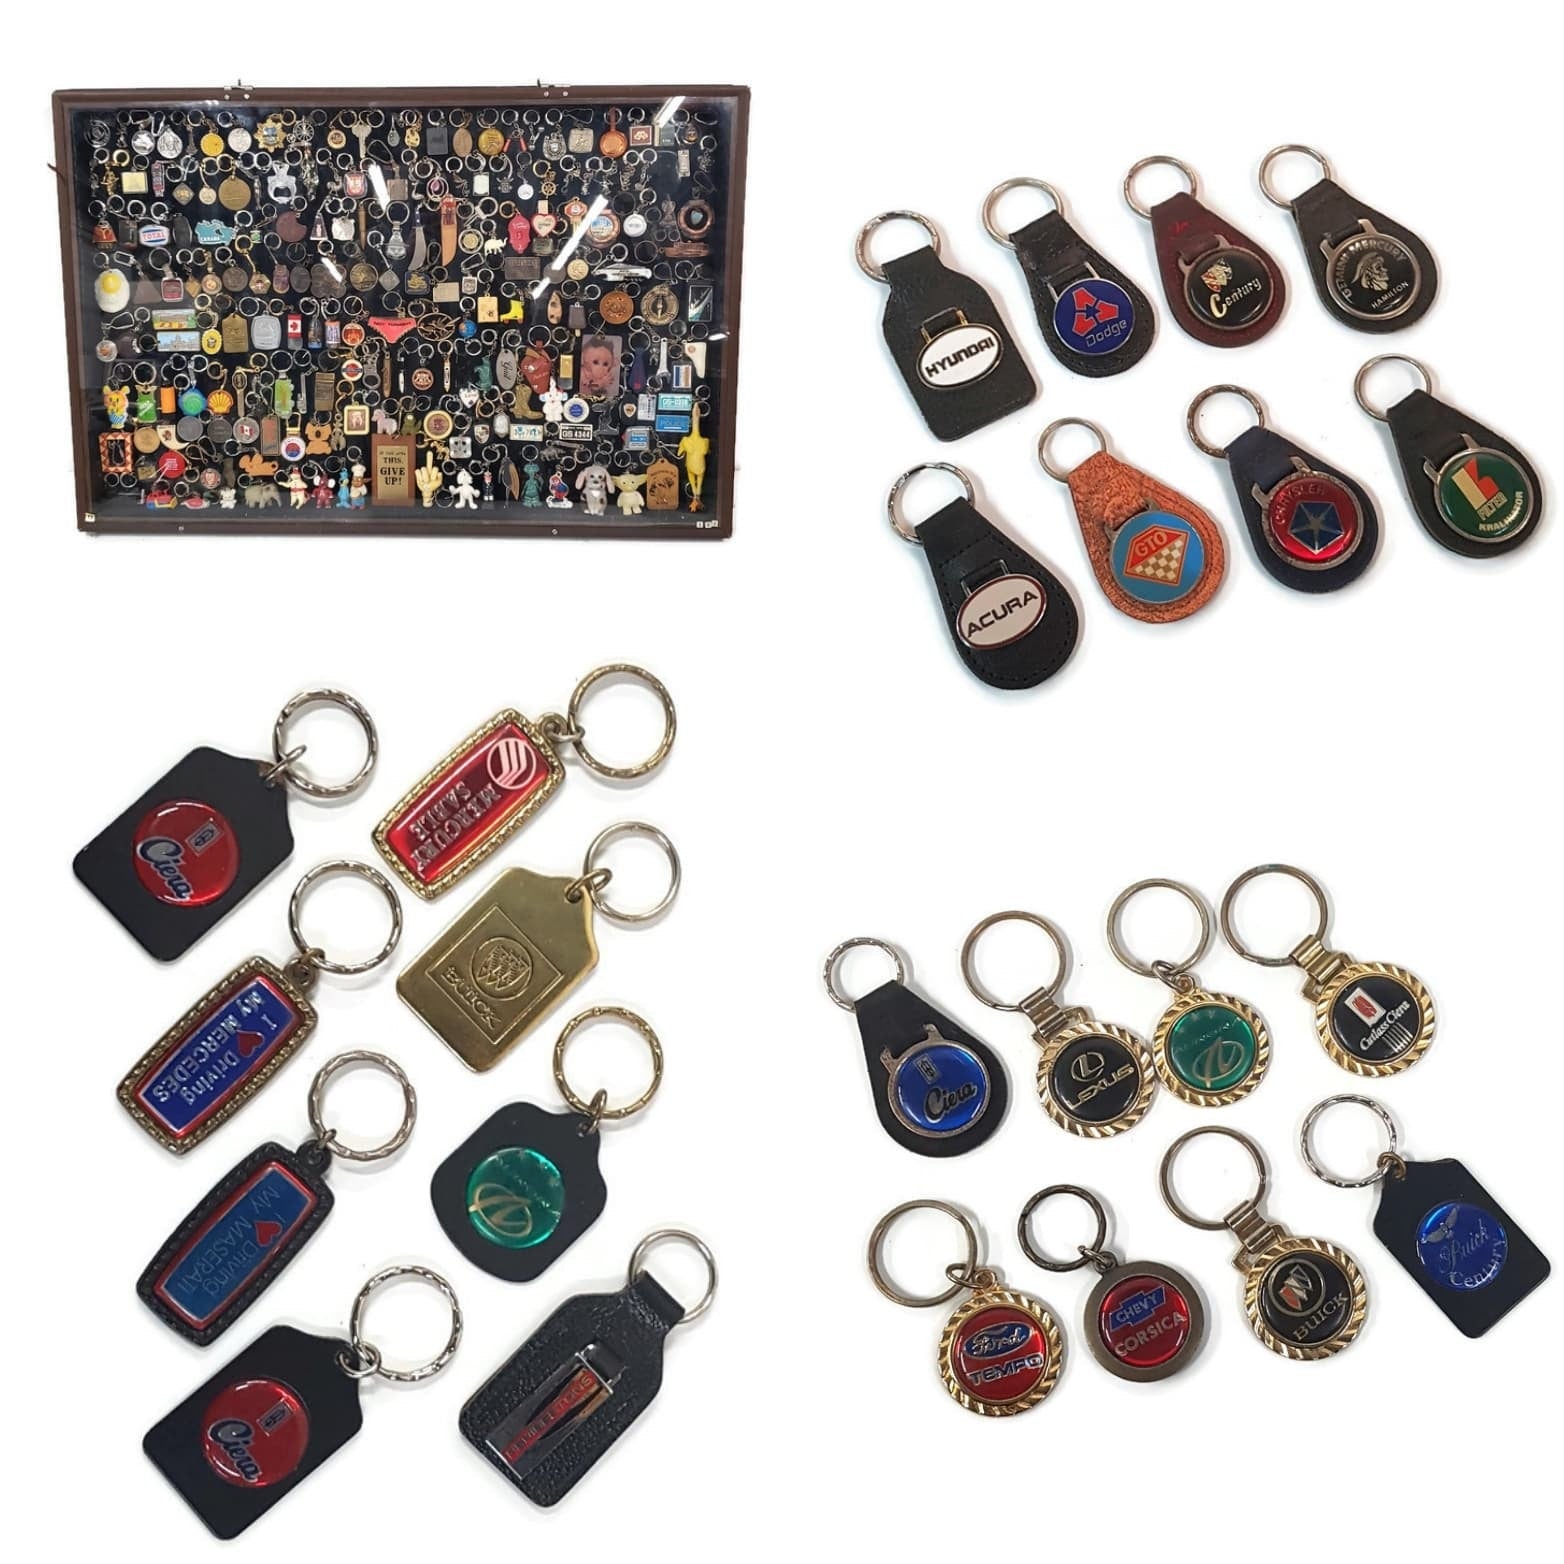 cutlas ciera key chain keychain key fob keytag vintage automotove keychain gift collectible